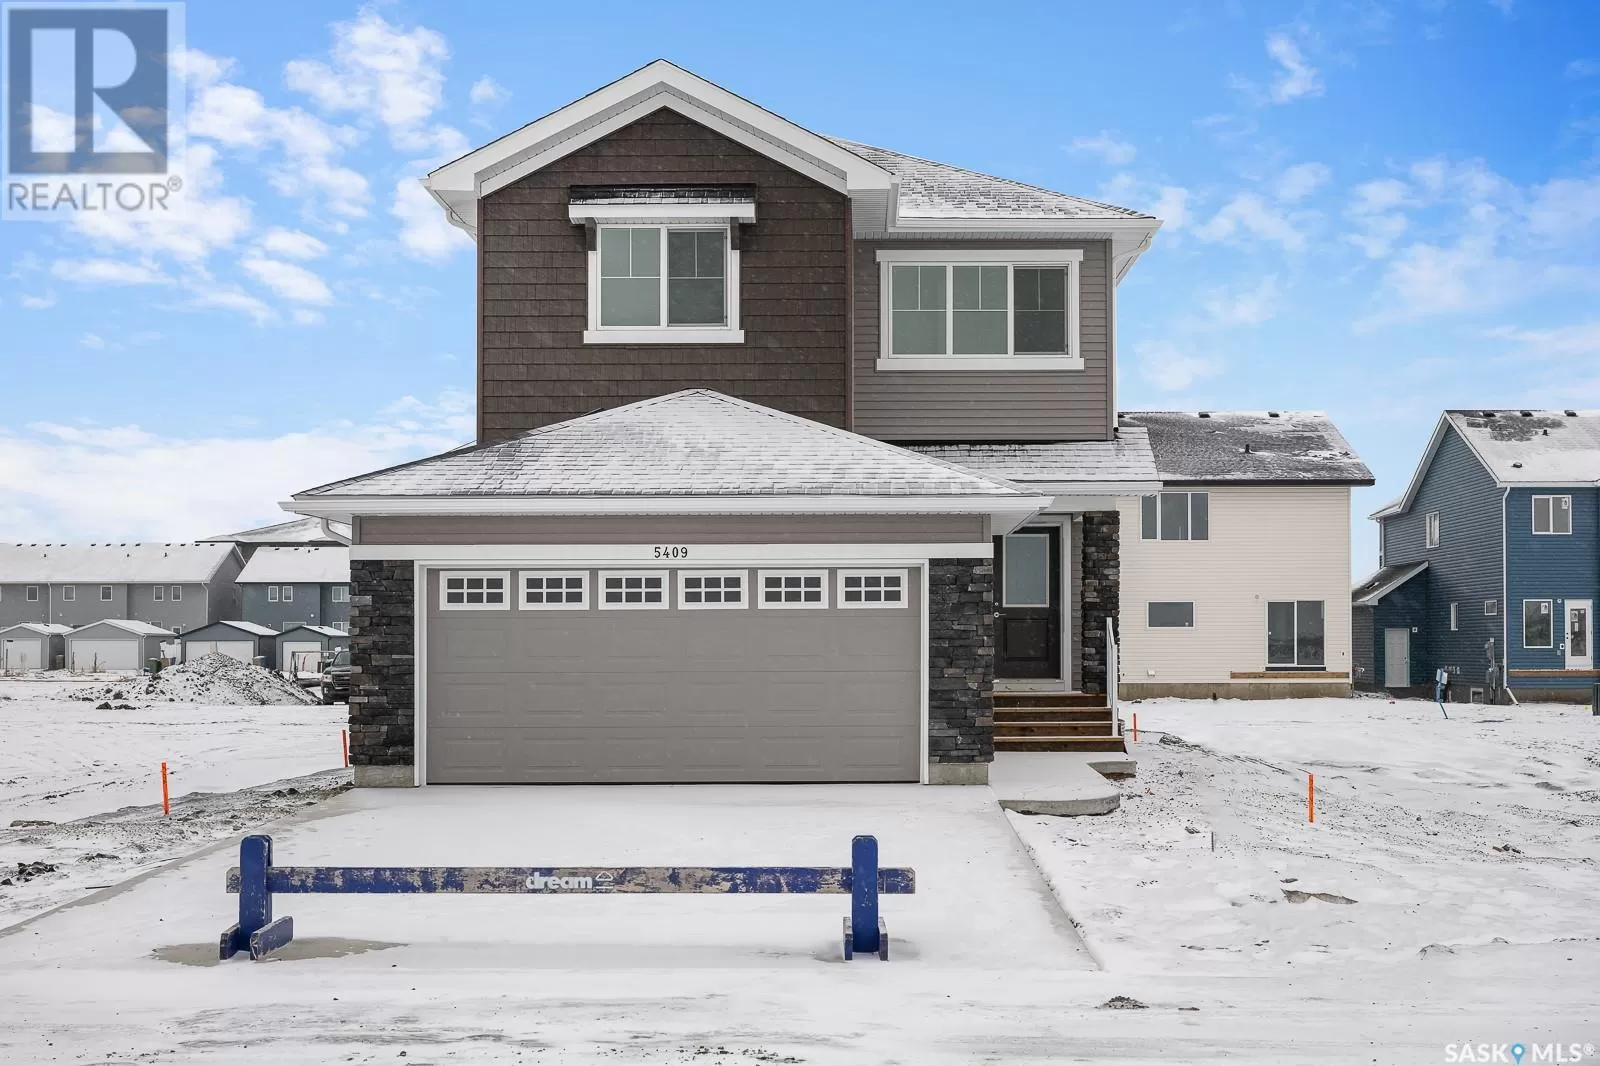 House for rent: 5409 Nicholson Avenue, Regina, Saskatchewan S4V 4B3